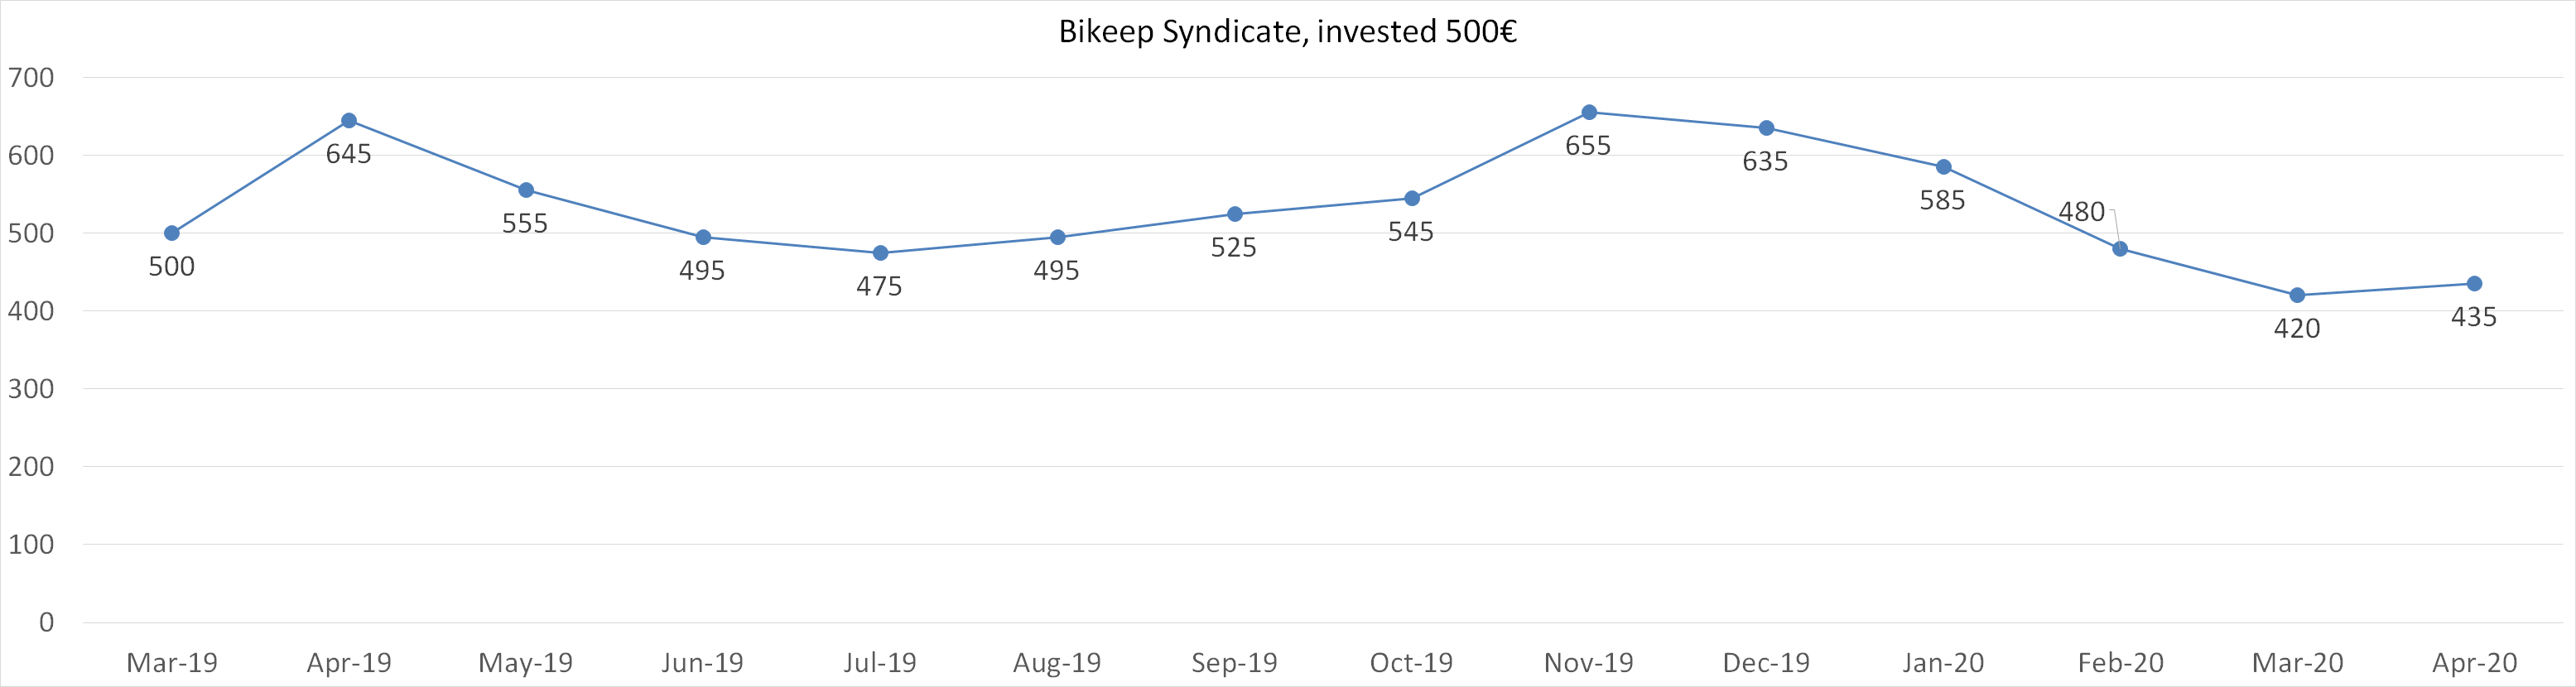 Bikeep syndicate net worth april 2020